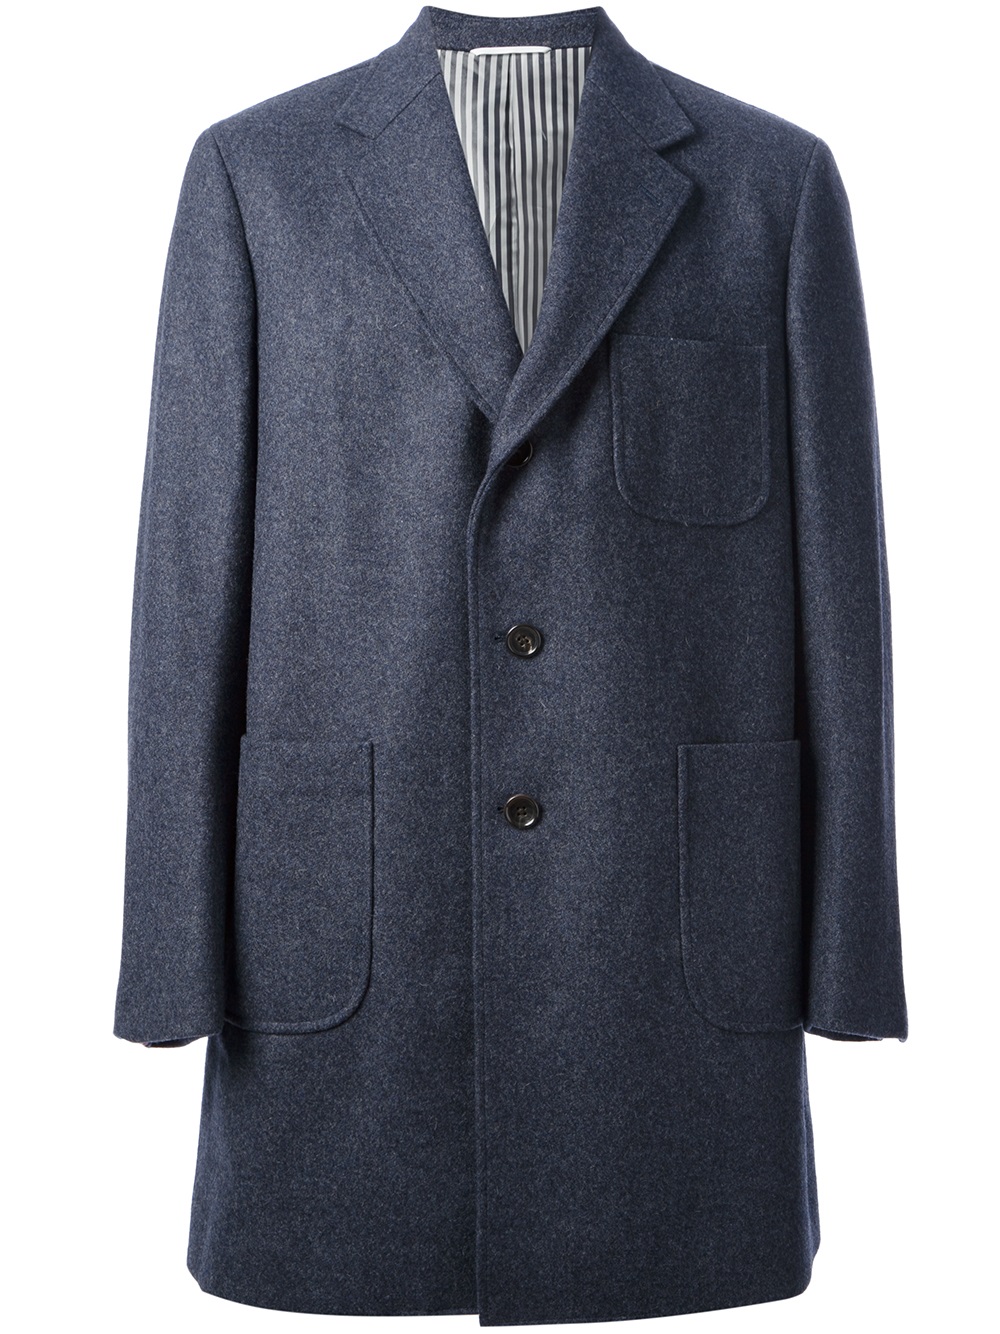 Thom Browne Patch Pocket Sack Over Coat in Blue for Men - Lyst